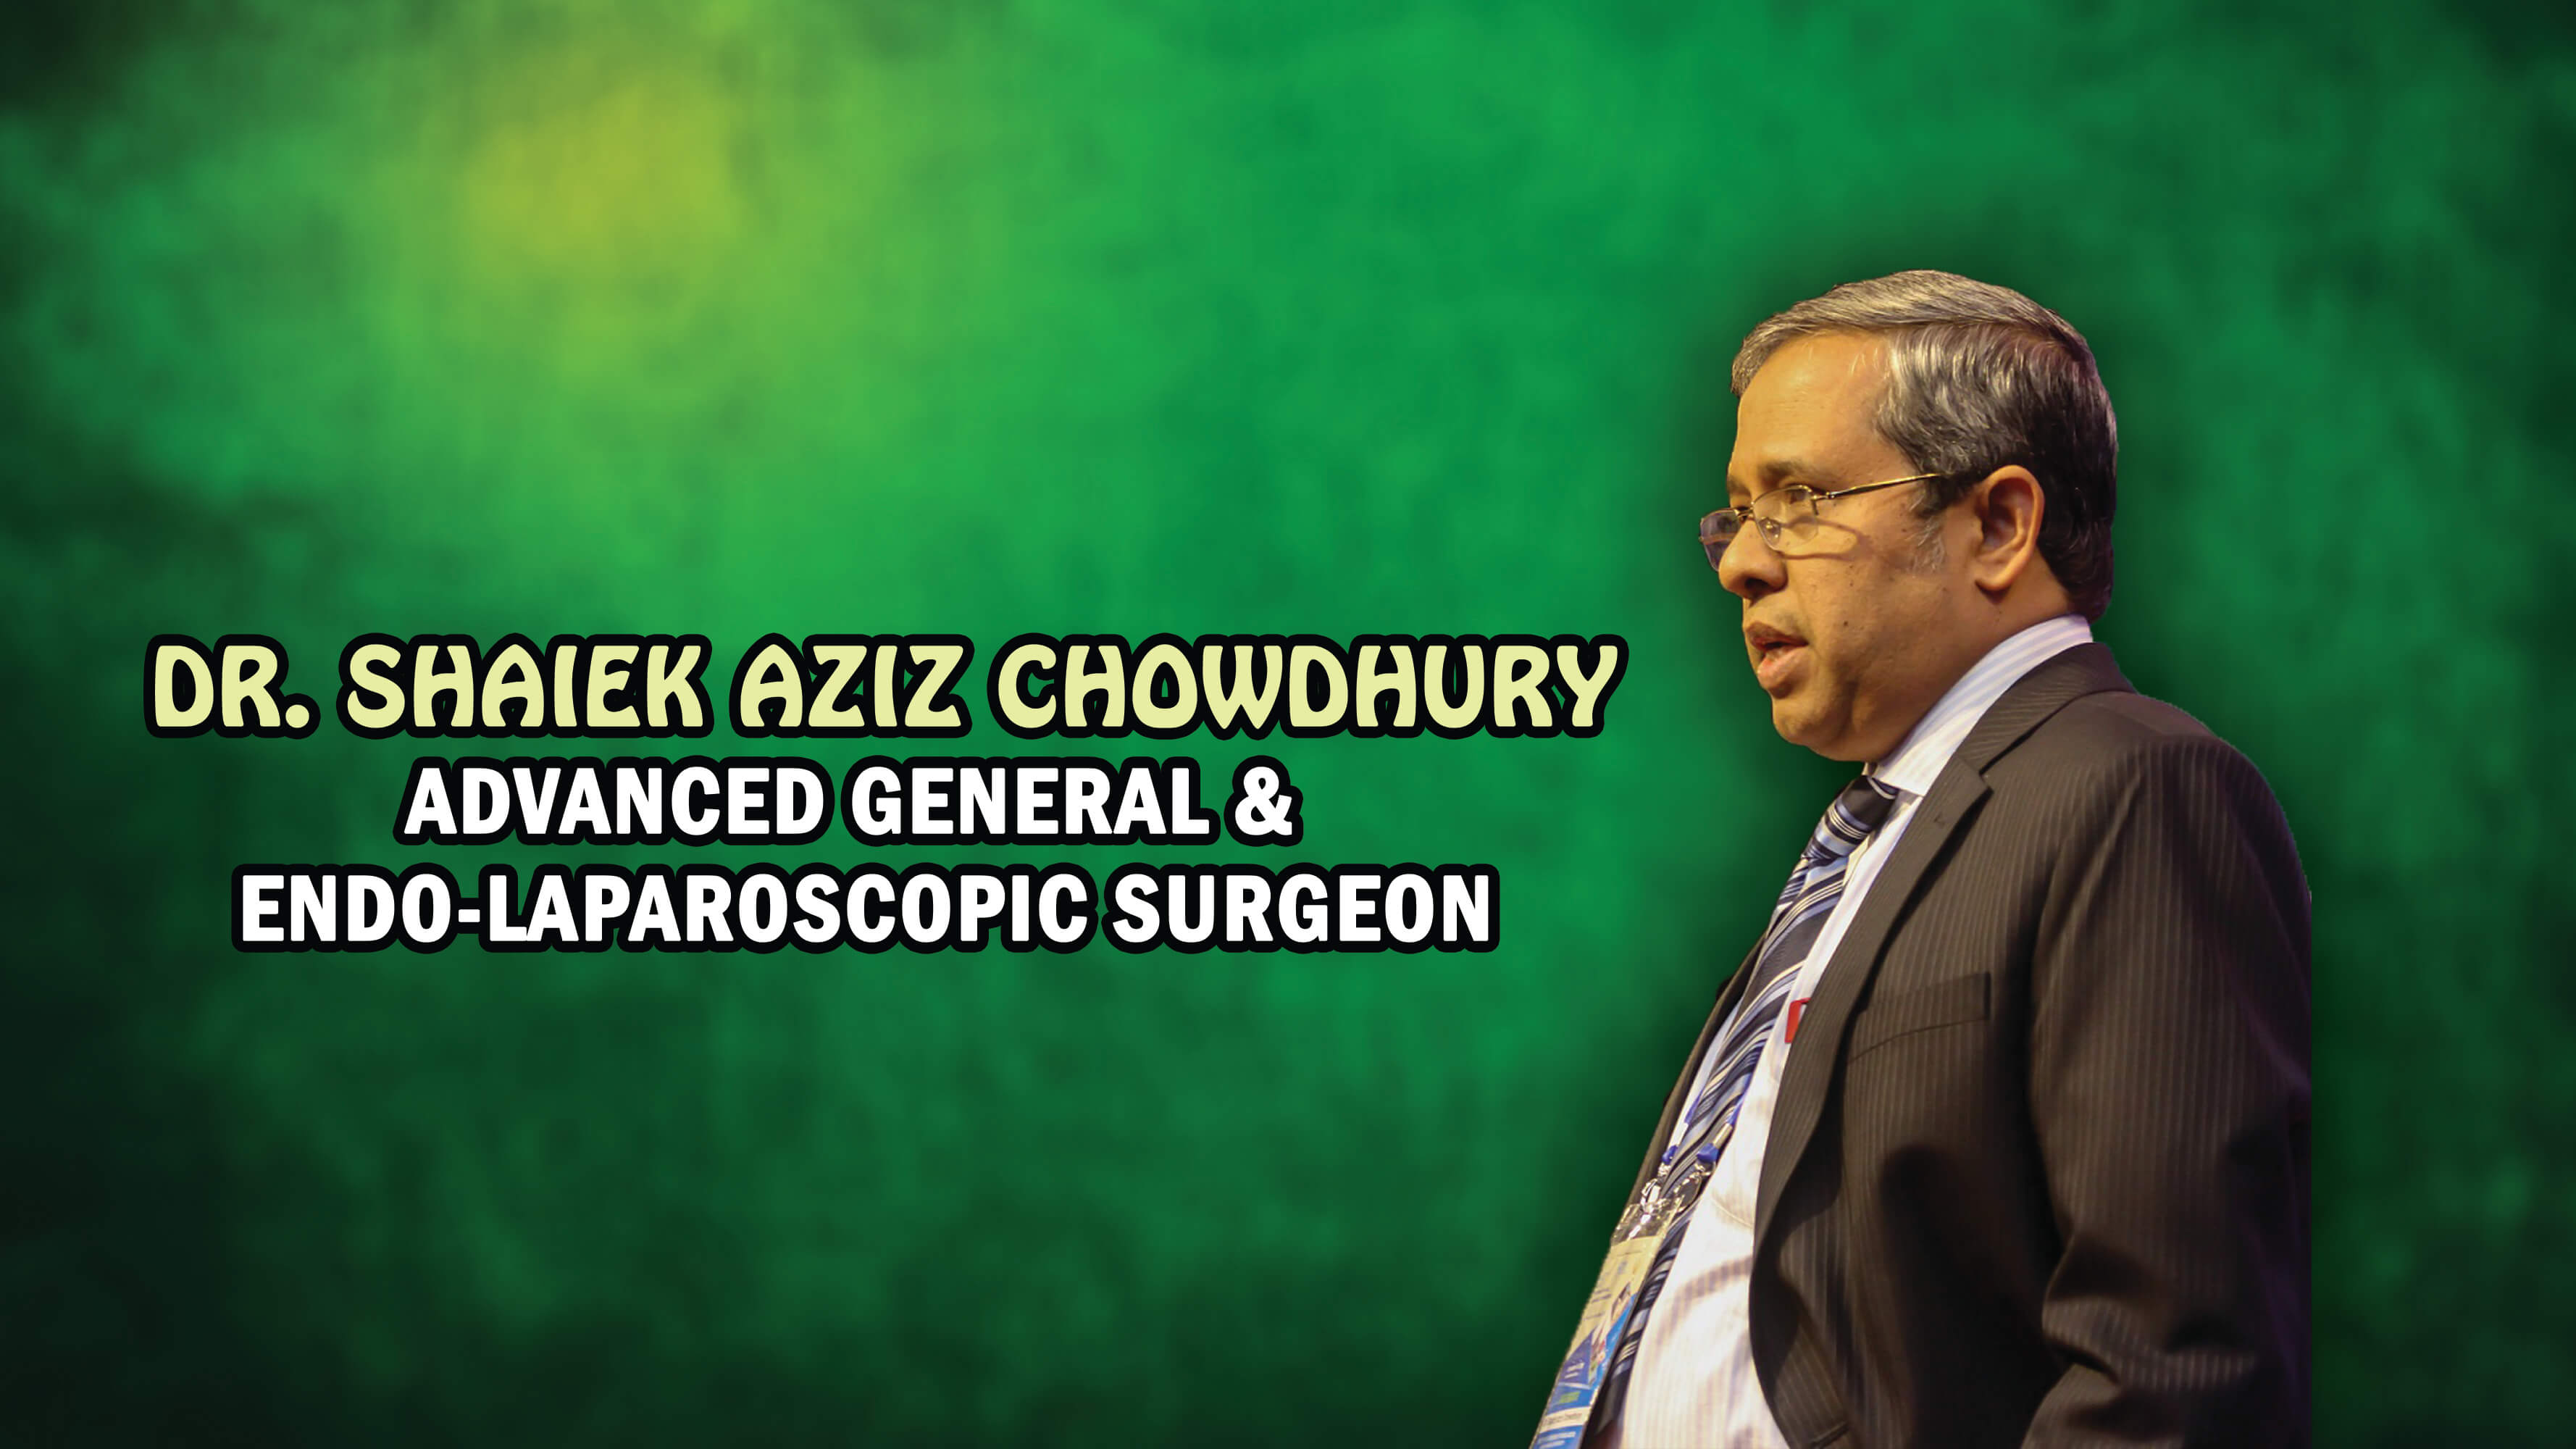 Dr. Shaiek Aziz Chowdhury Front Image